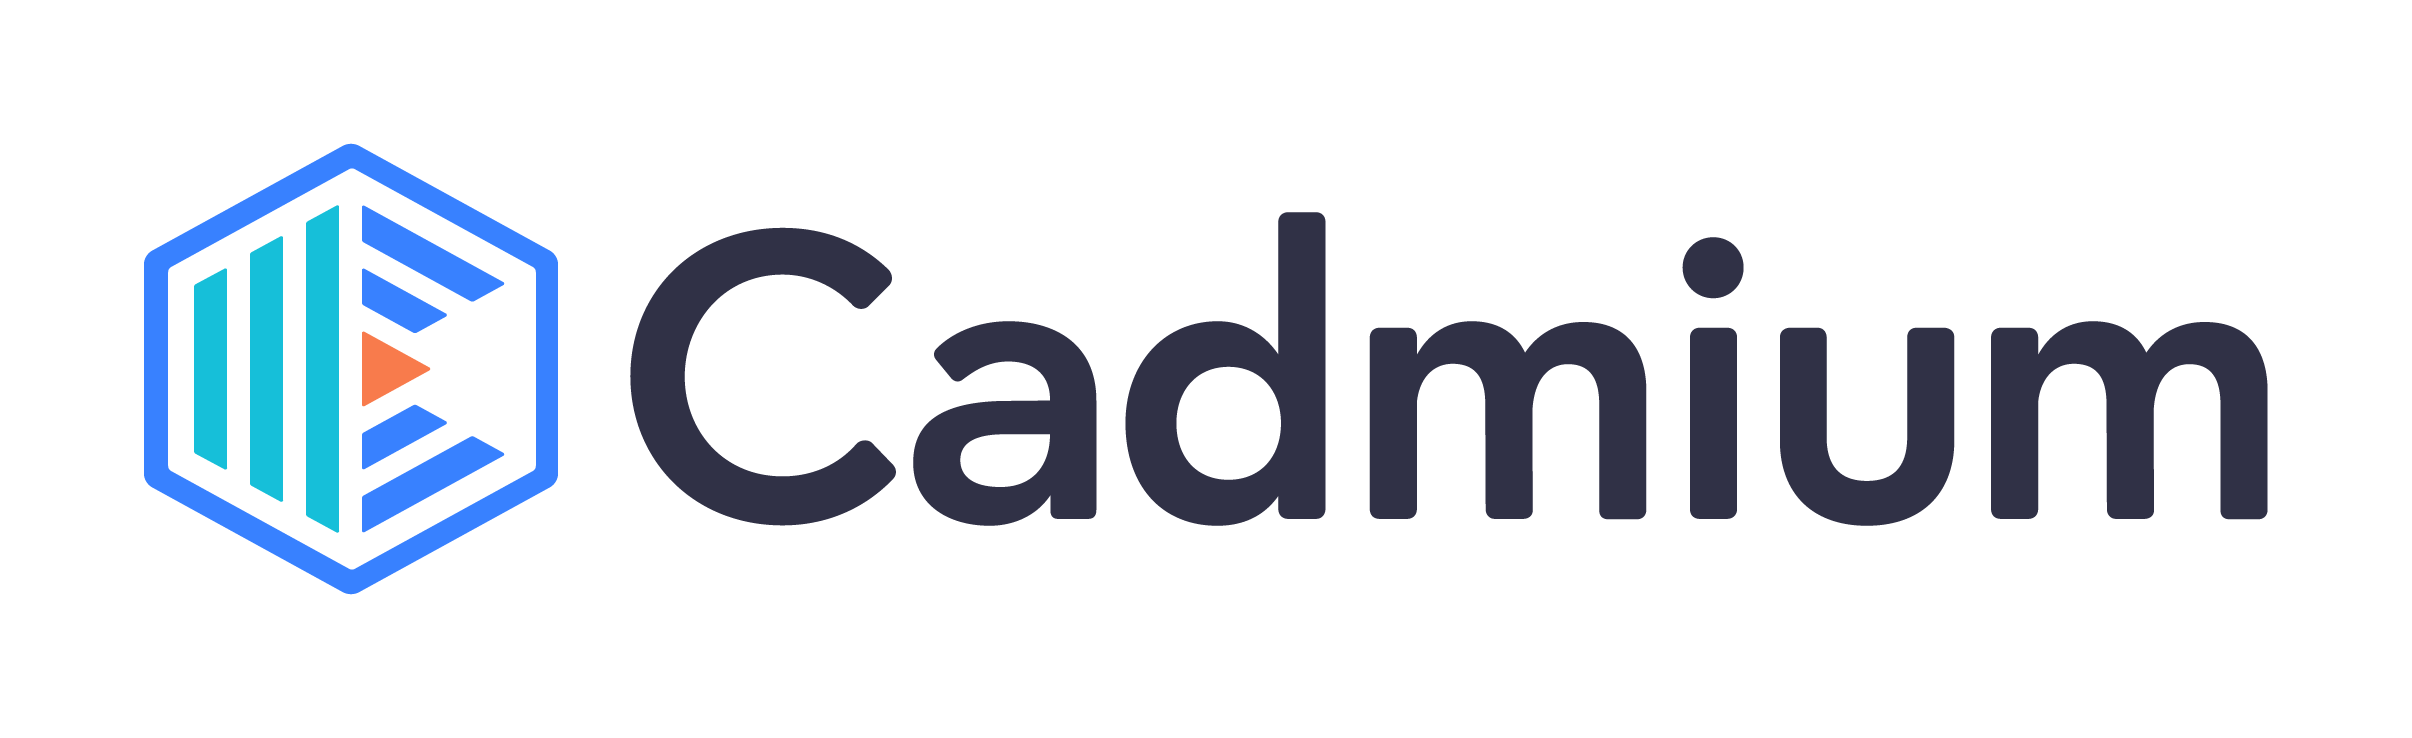 cadiumcd-logo